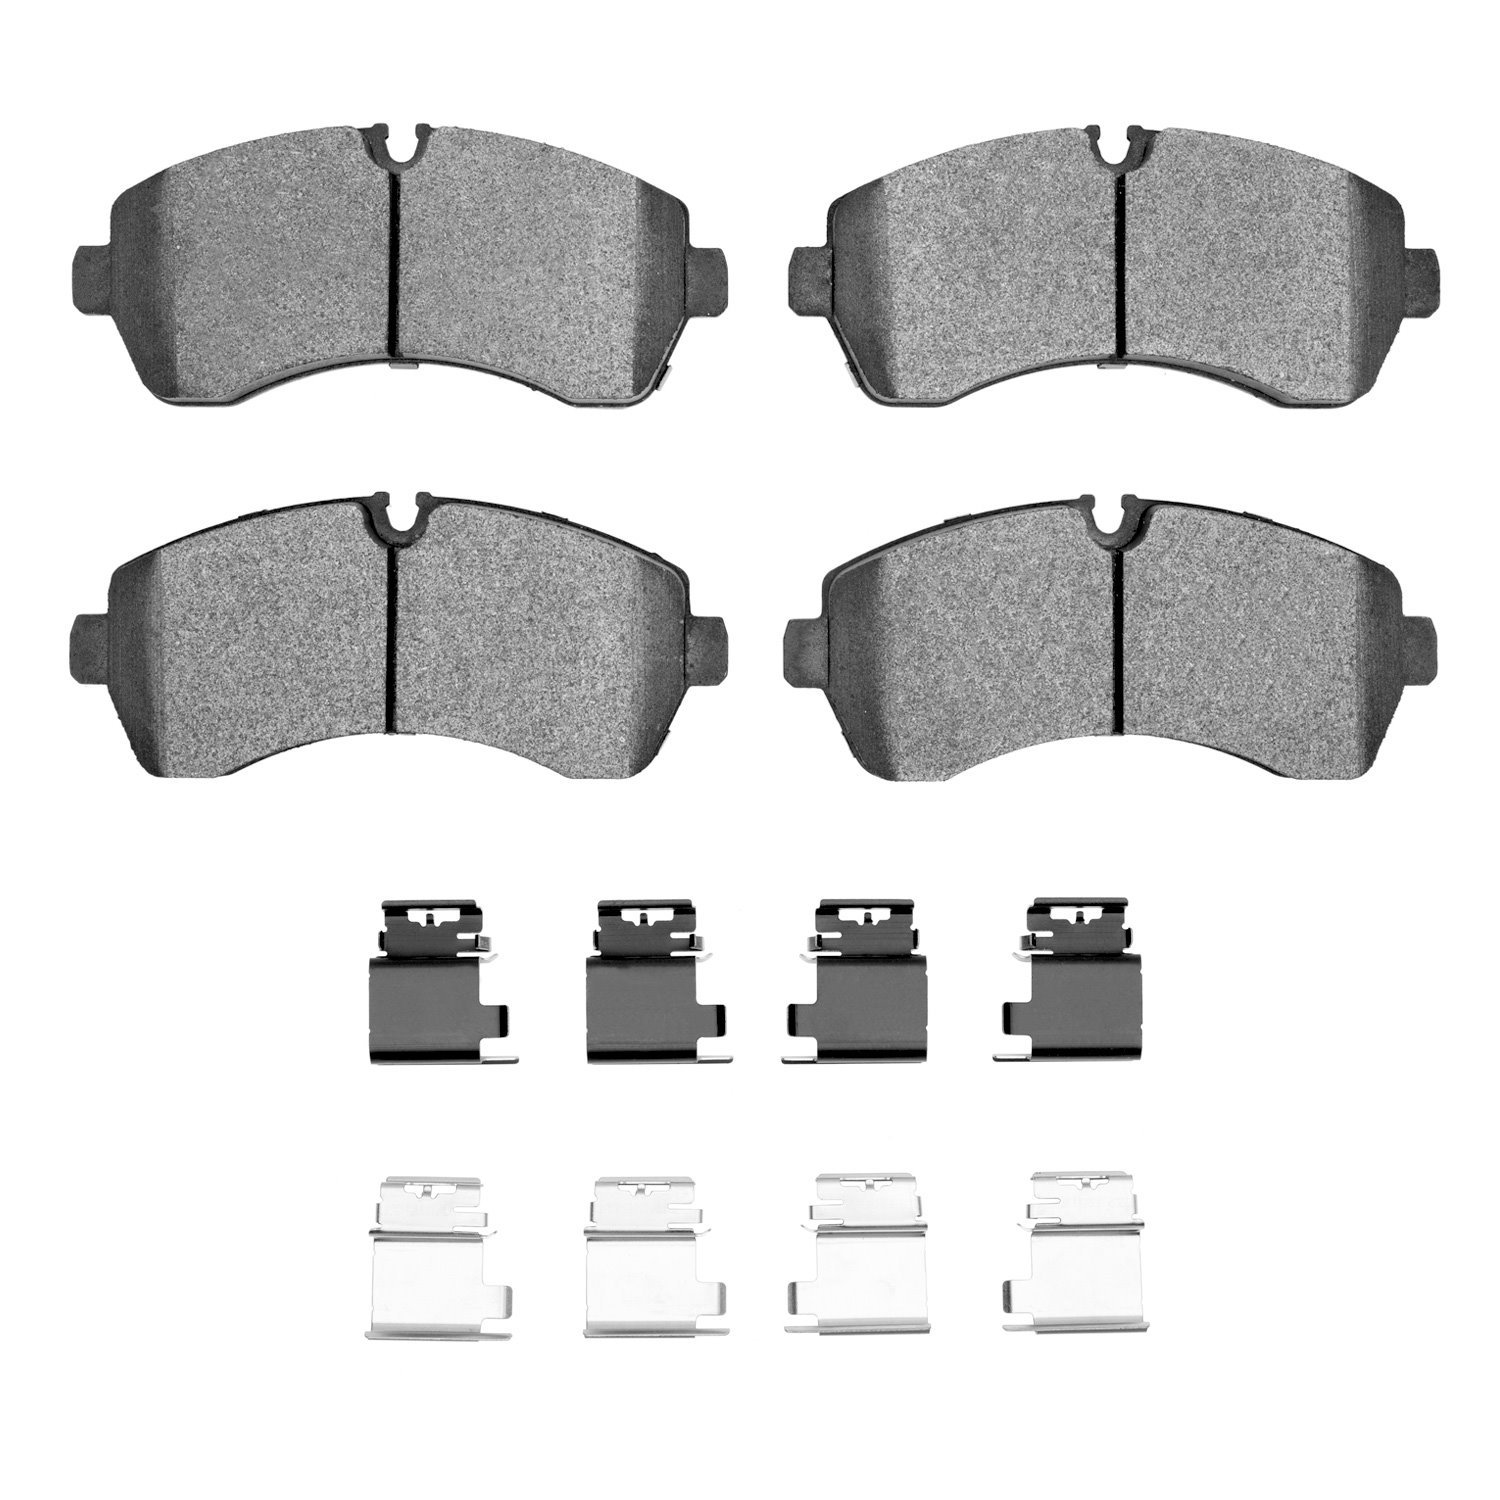 1214-1268-02 Heavy-Duty Brake Pads & Hardware Kit, Fits Select Multiple Makes/Models, Position: Fr,Front